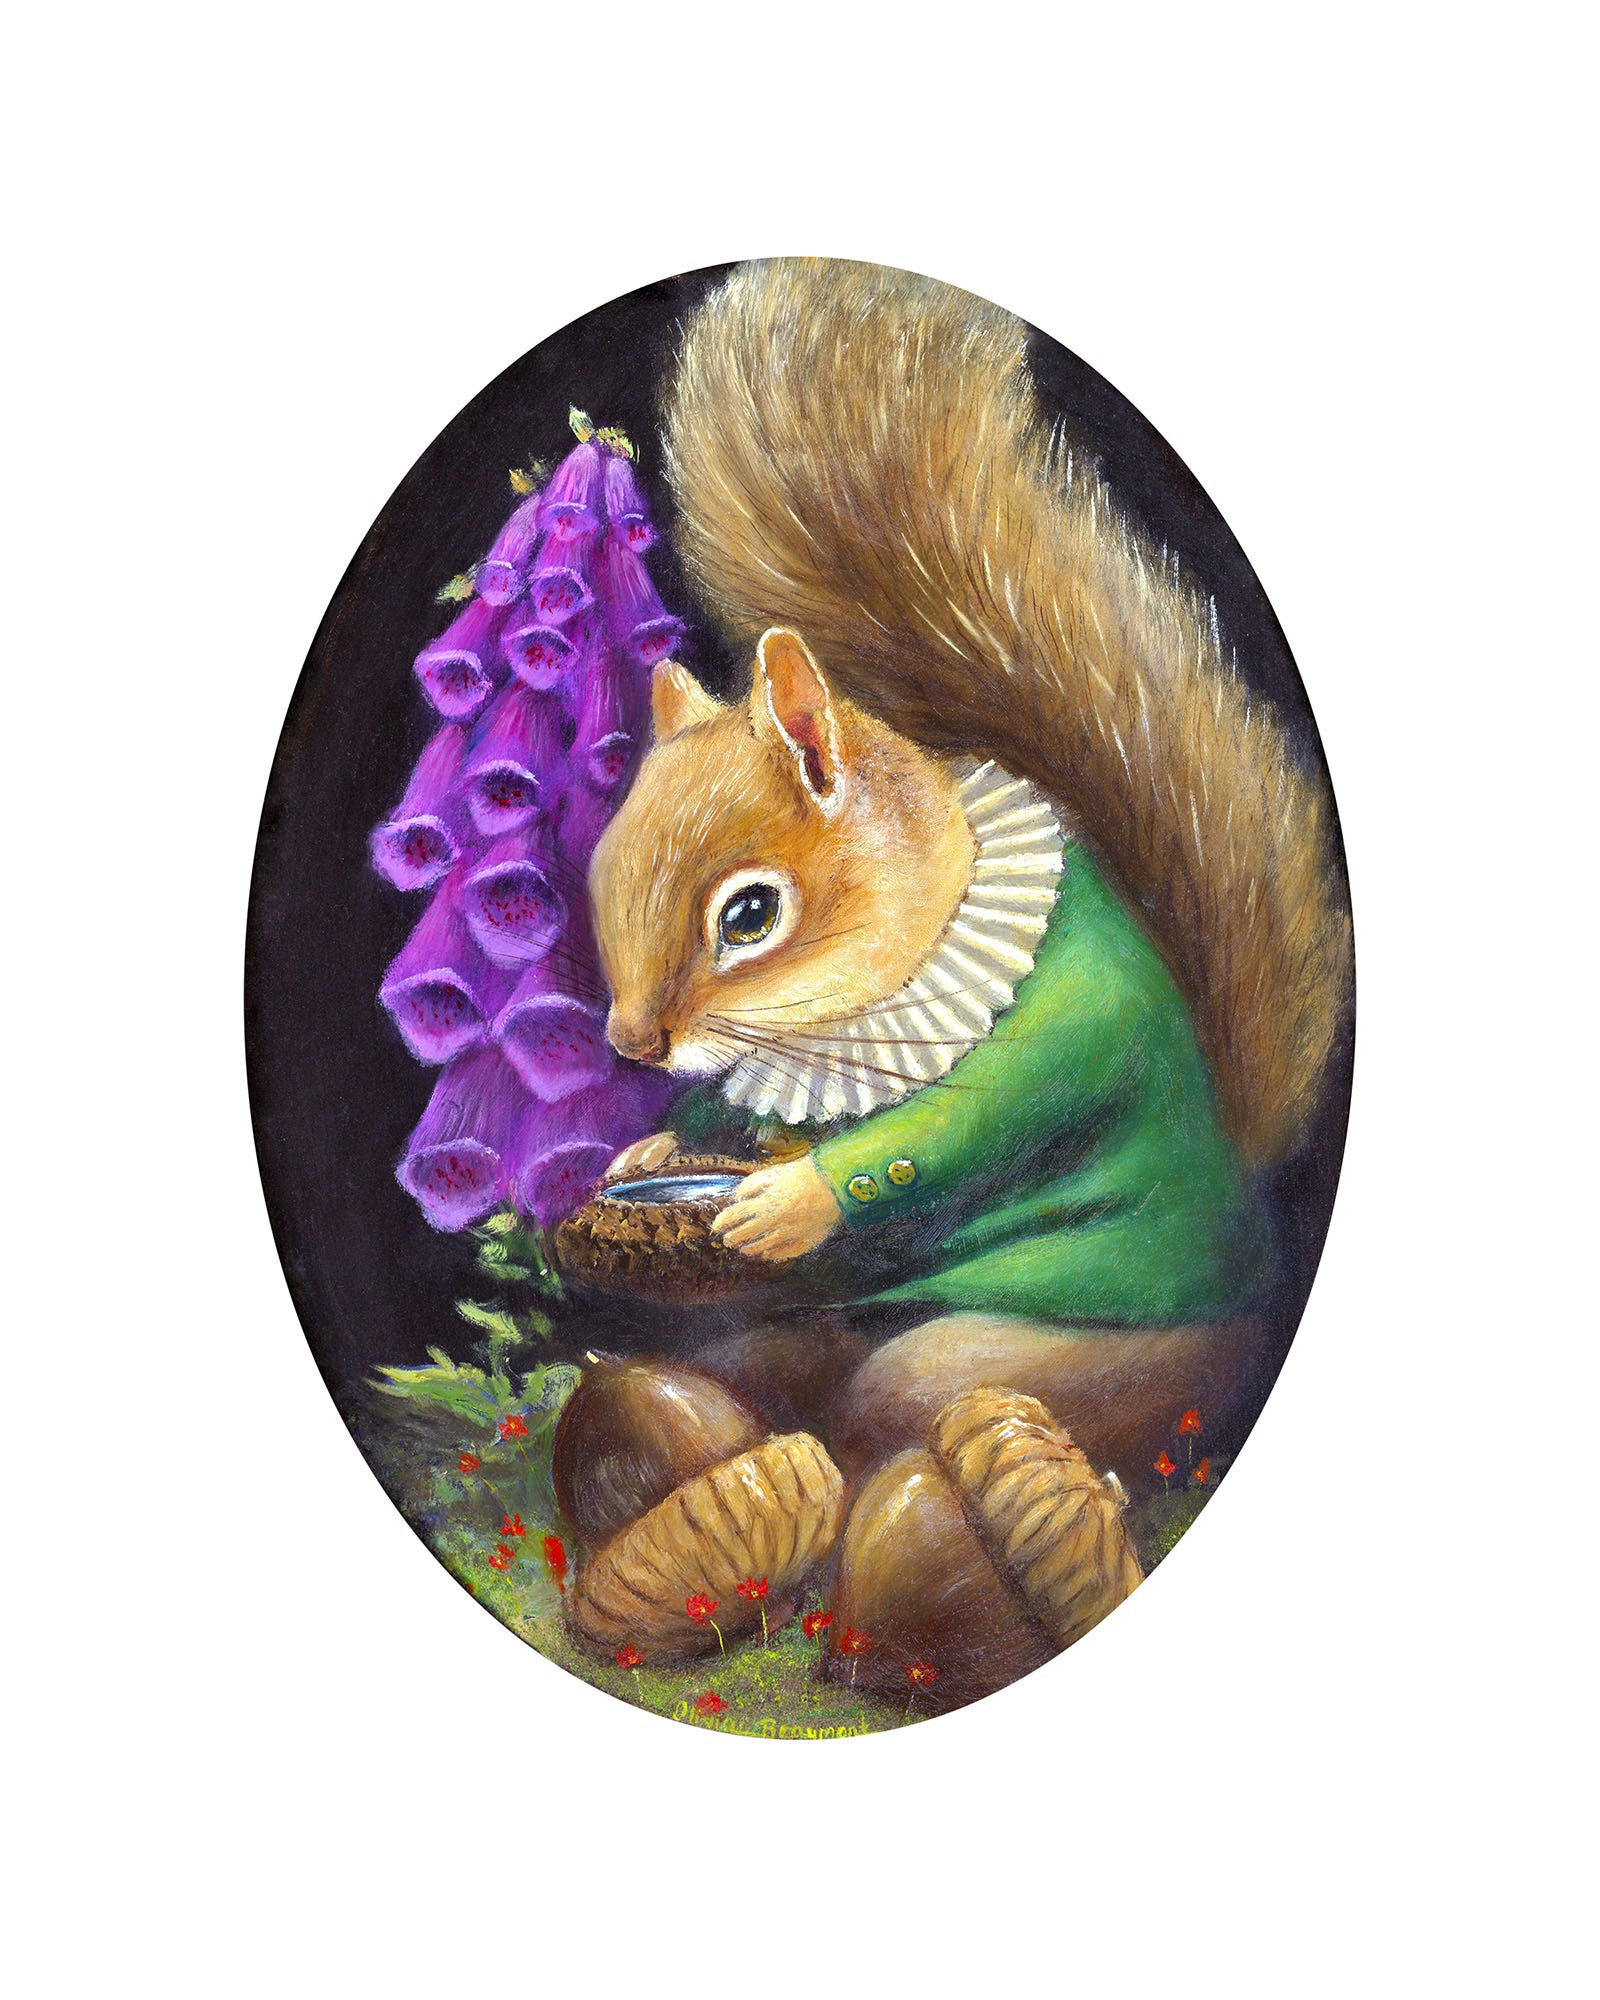 Squirrel artwork - Quincey Woodward - prints